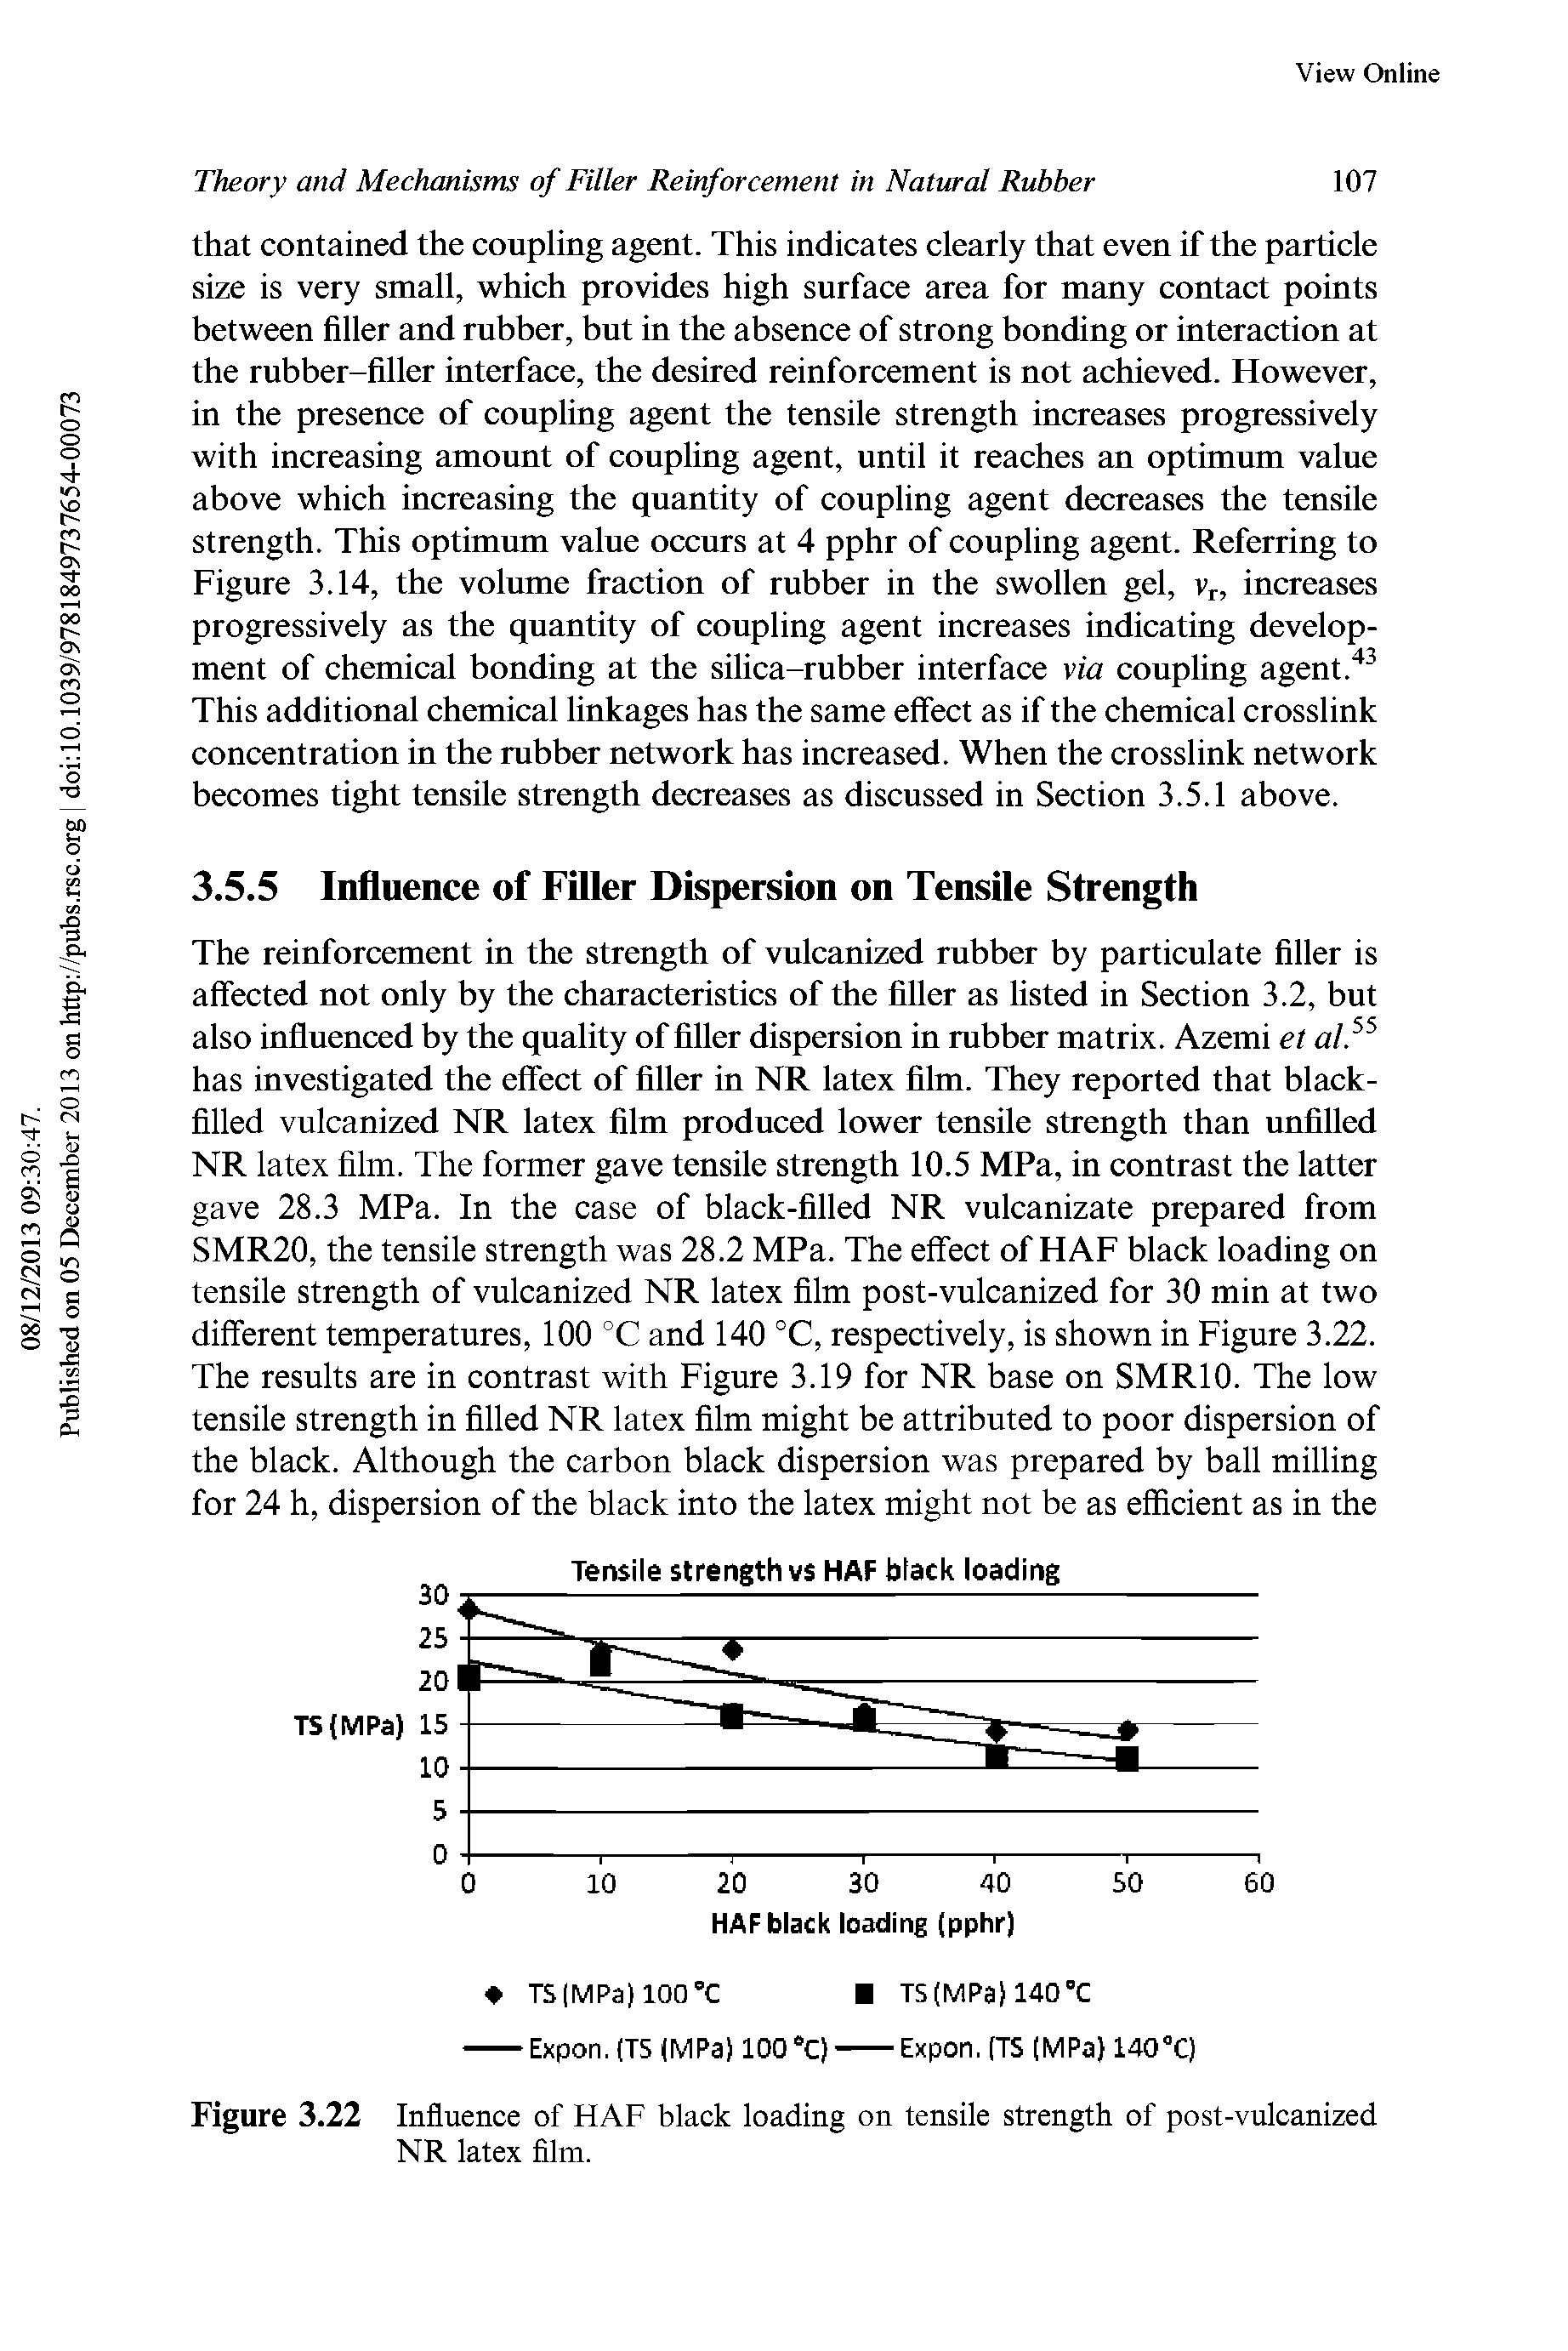 Figure 3.22 Influence of HAF black loading on tensile strength of post-vulcanized NR latex film.